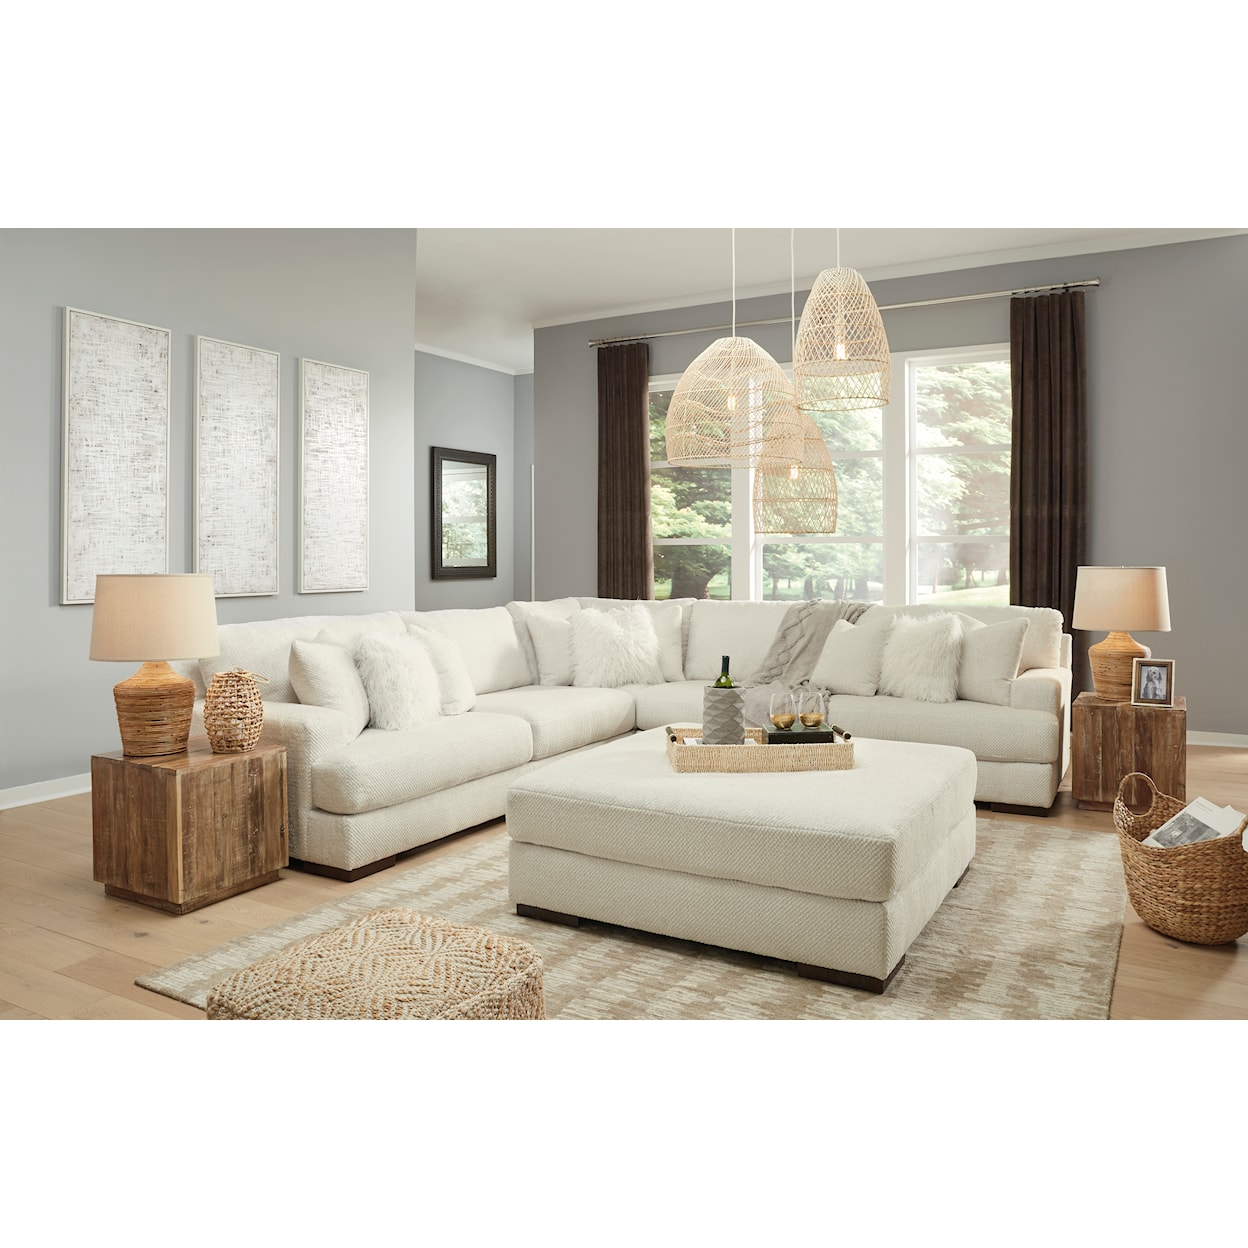 Ashley Furniture Signature Design Zada Living Room Set